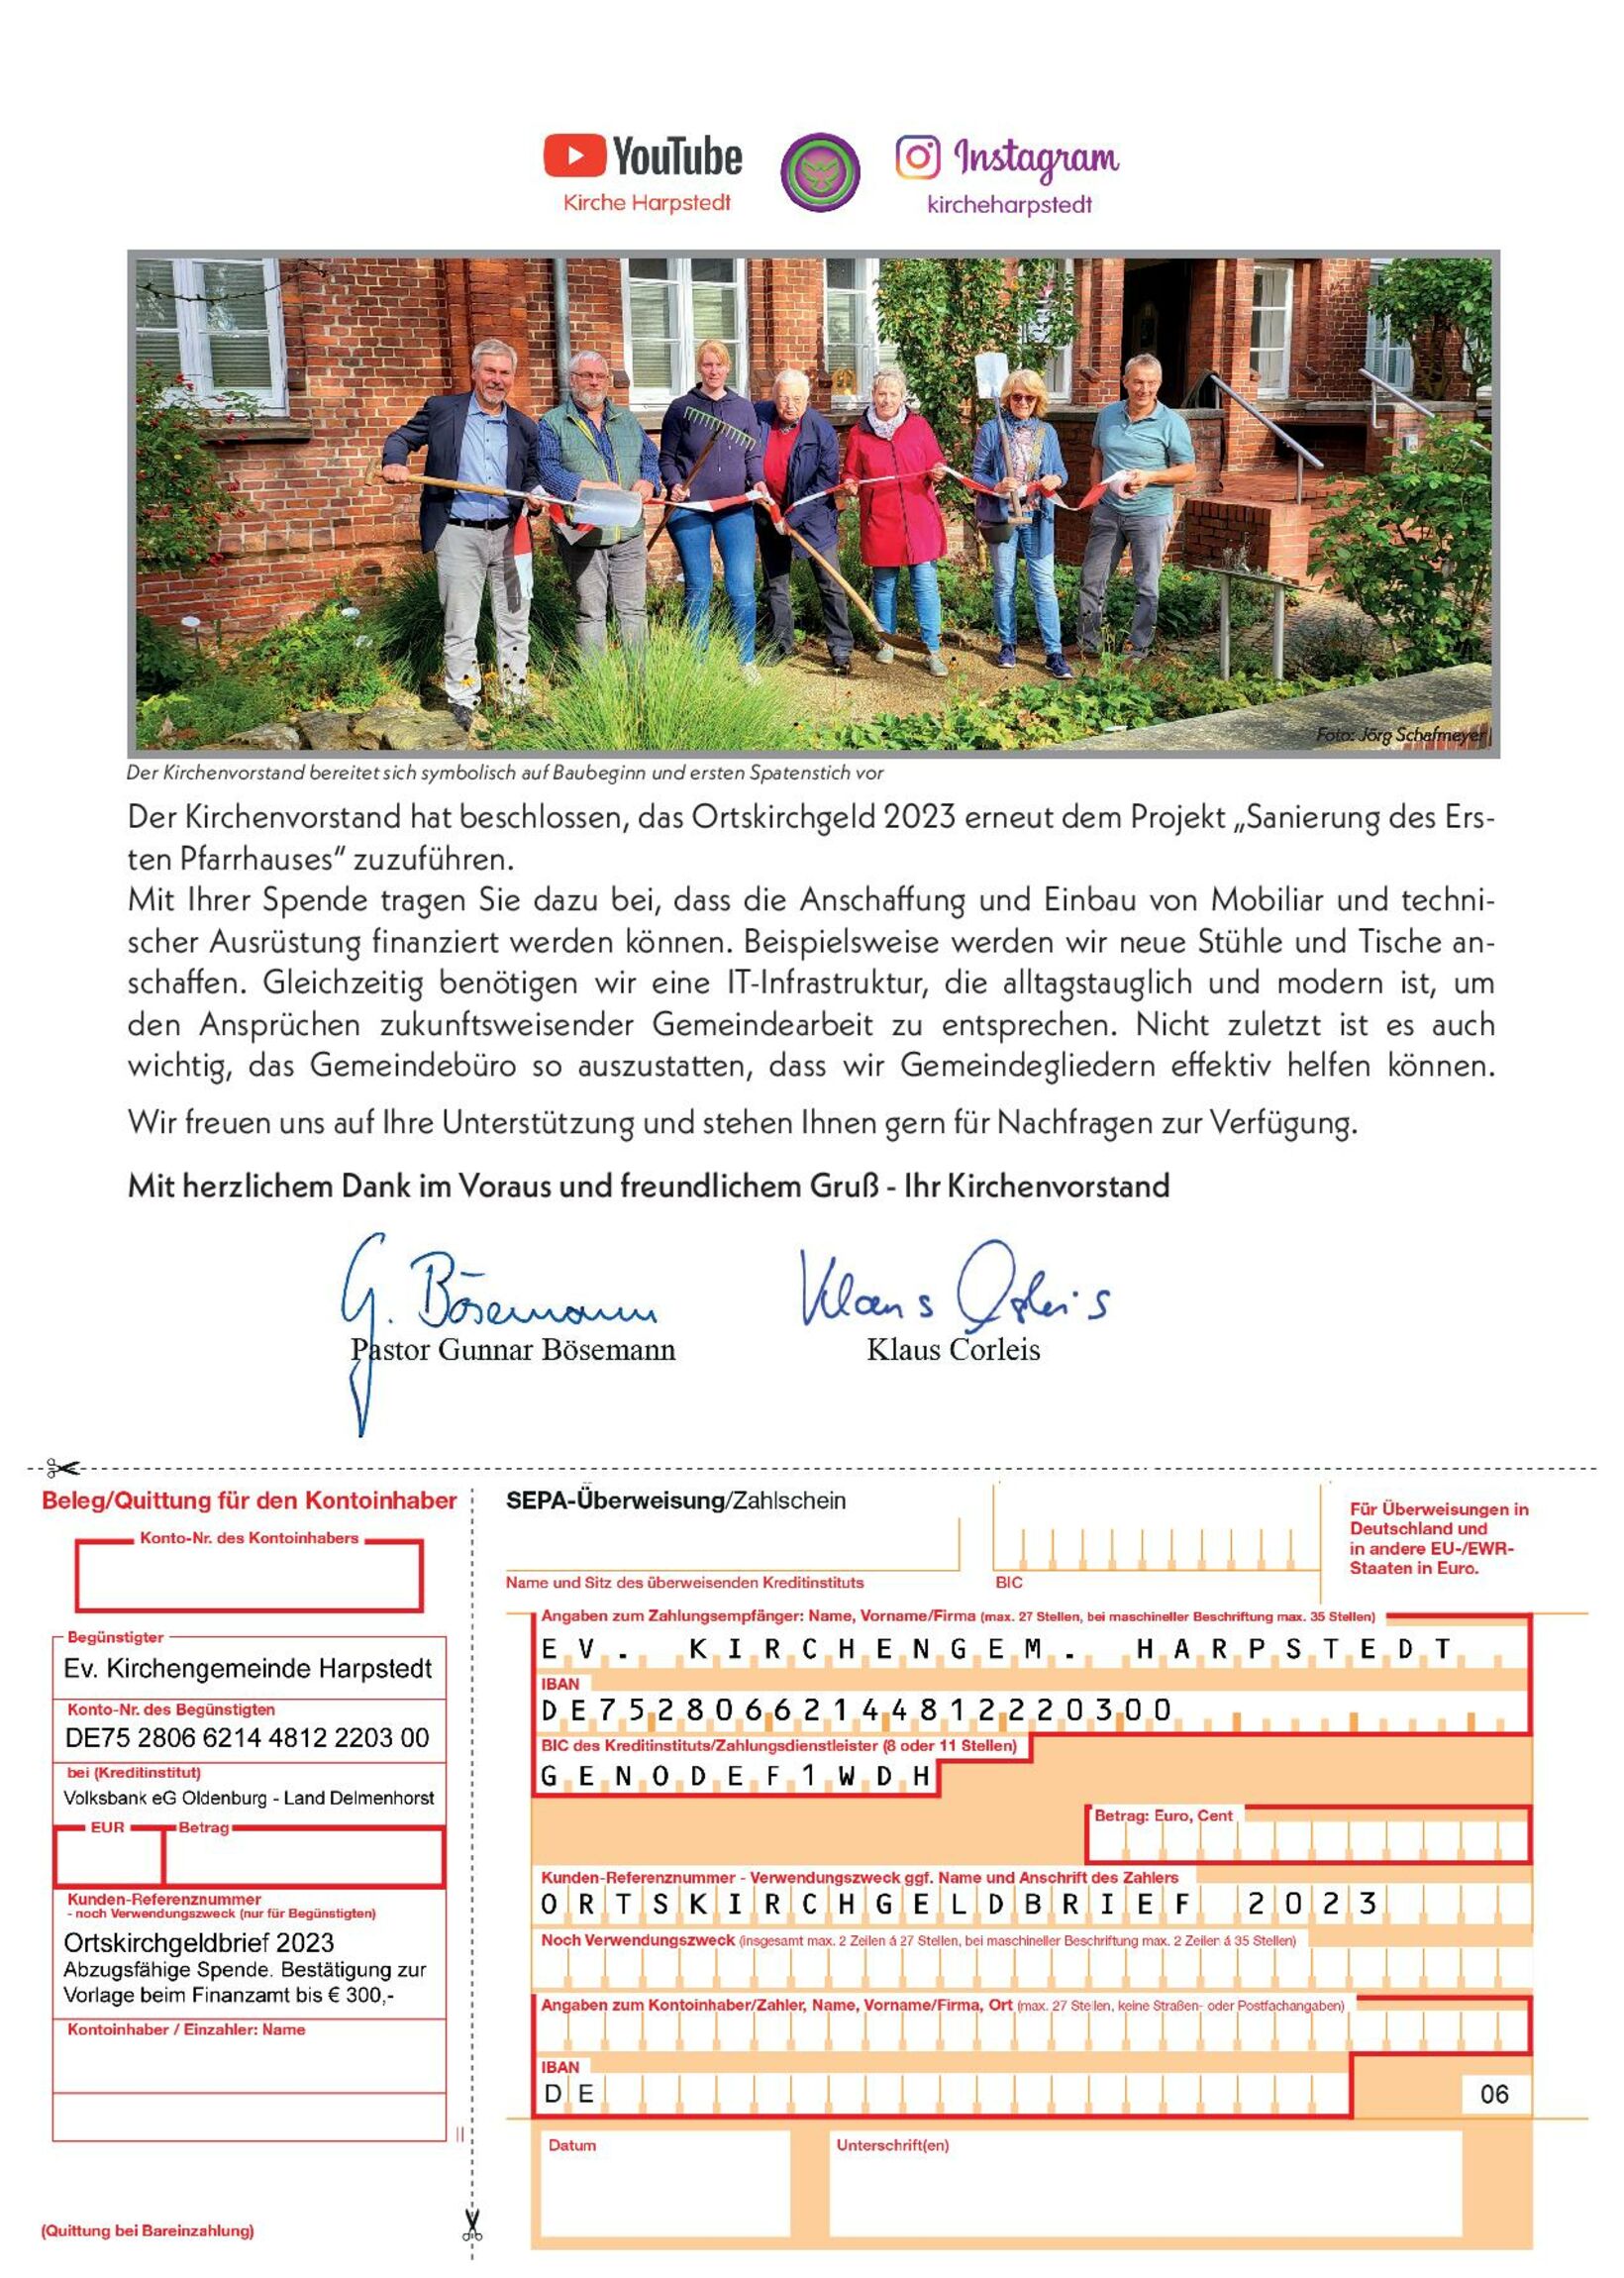 Ortskirchgeldbrief 2023 A4-page-002